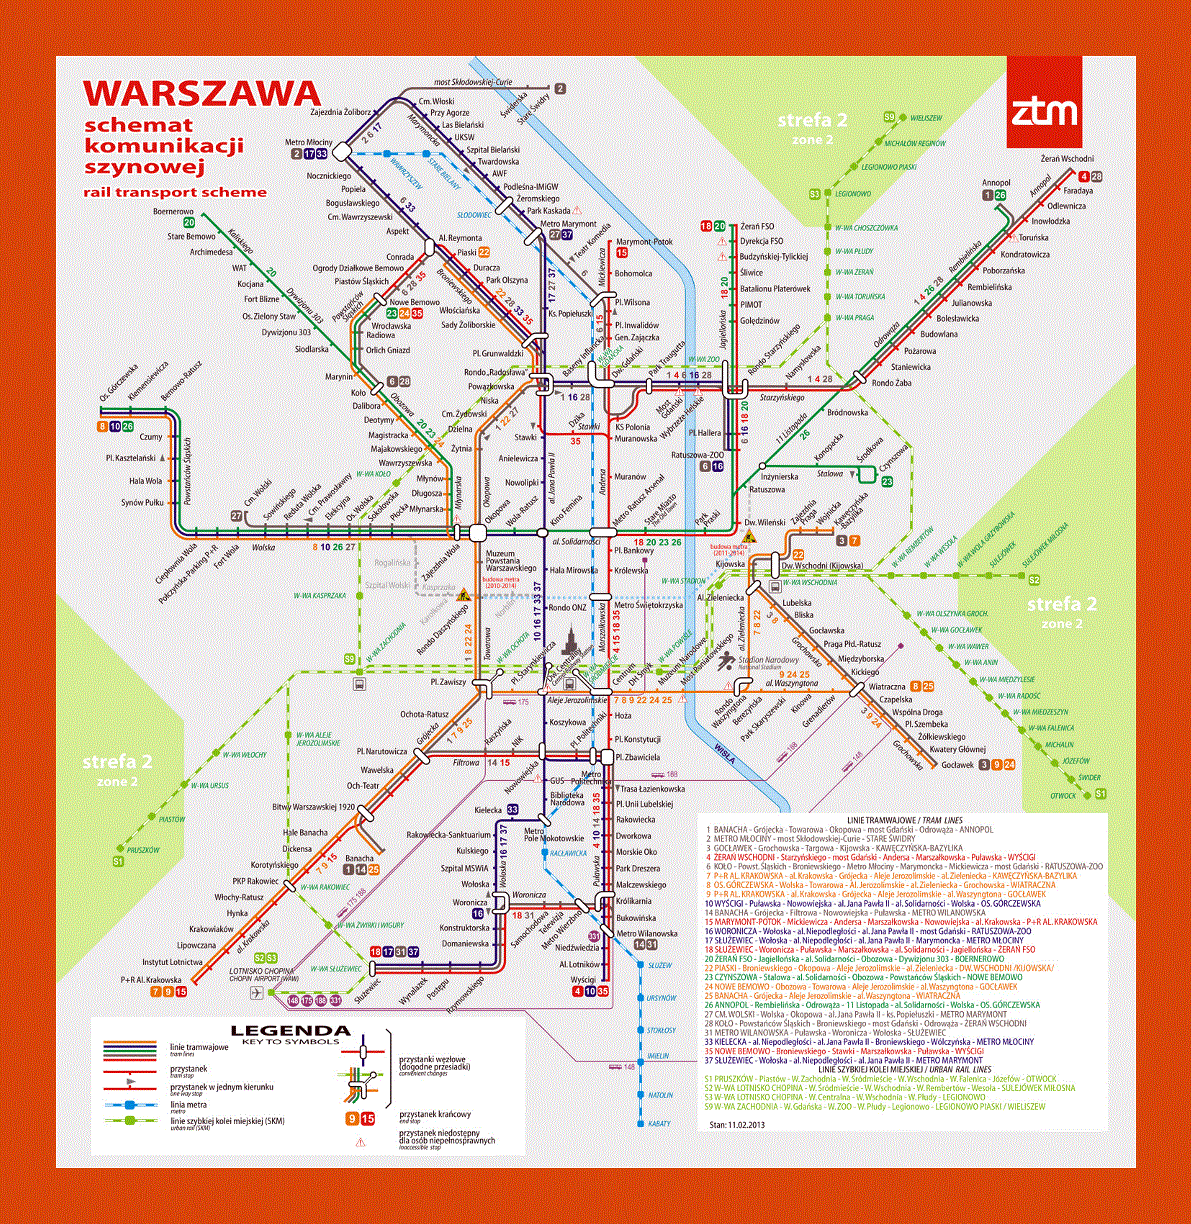 Tram communication map of Warsaw city